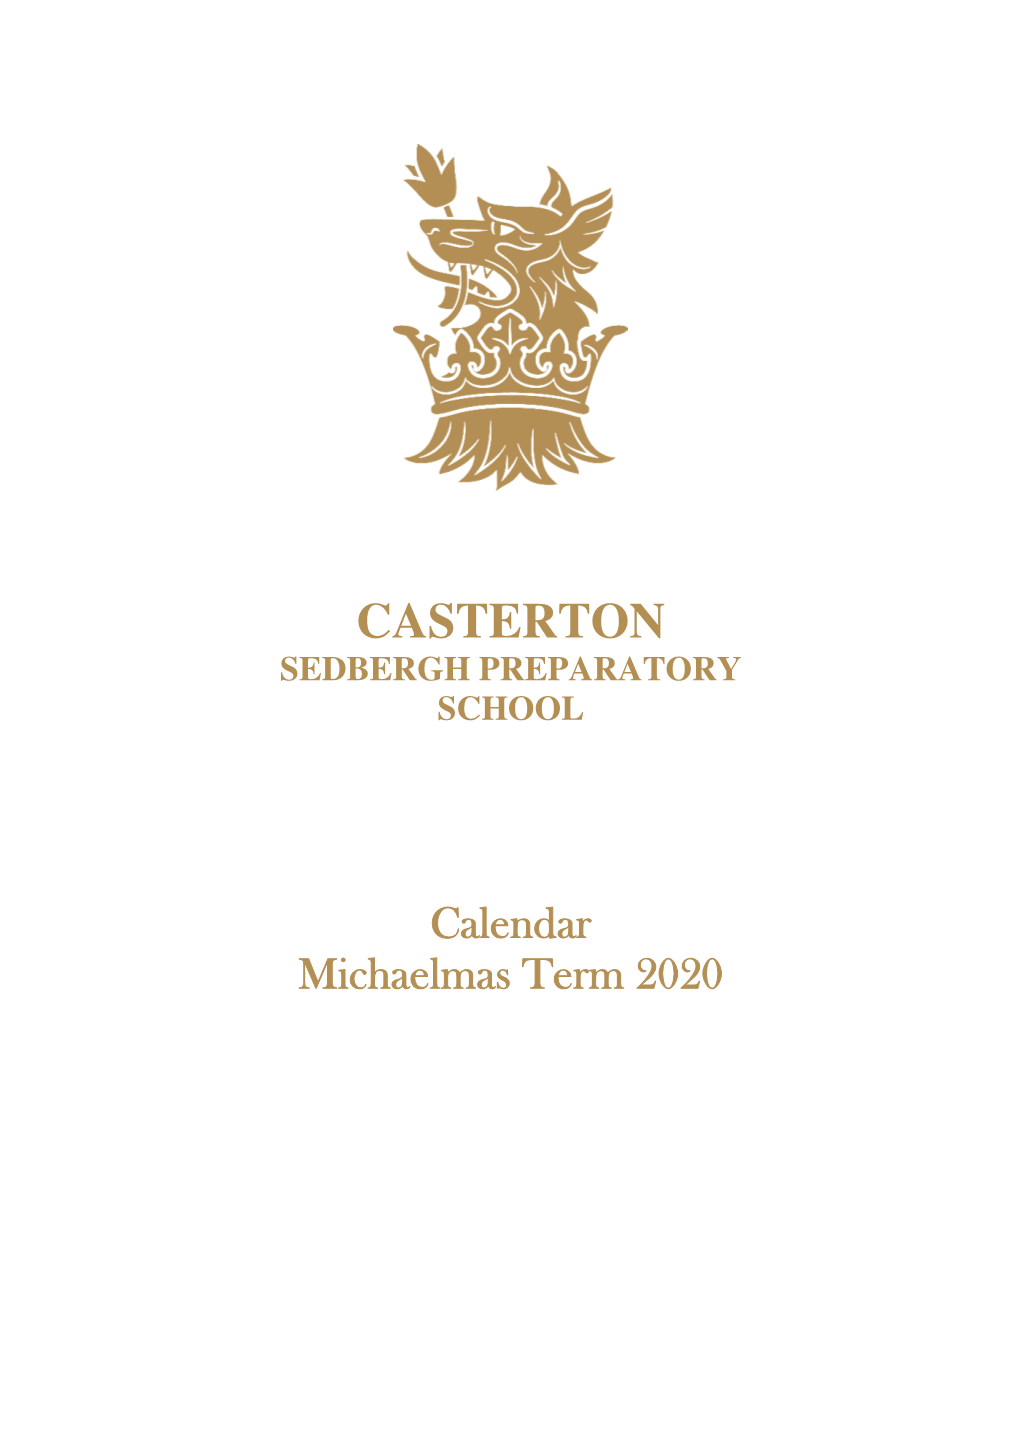 Casterton Sedbergh Preparatory School